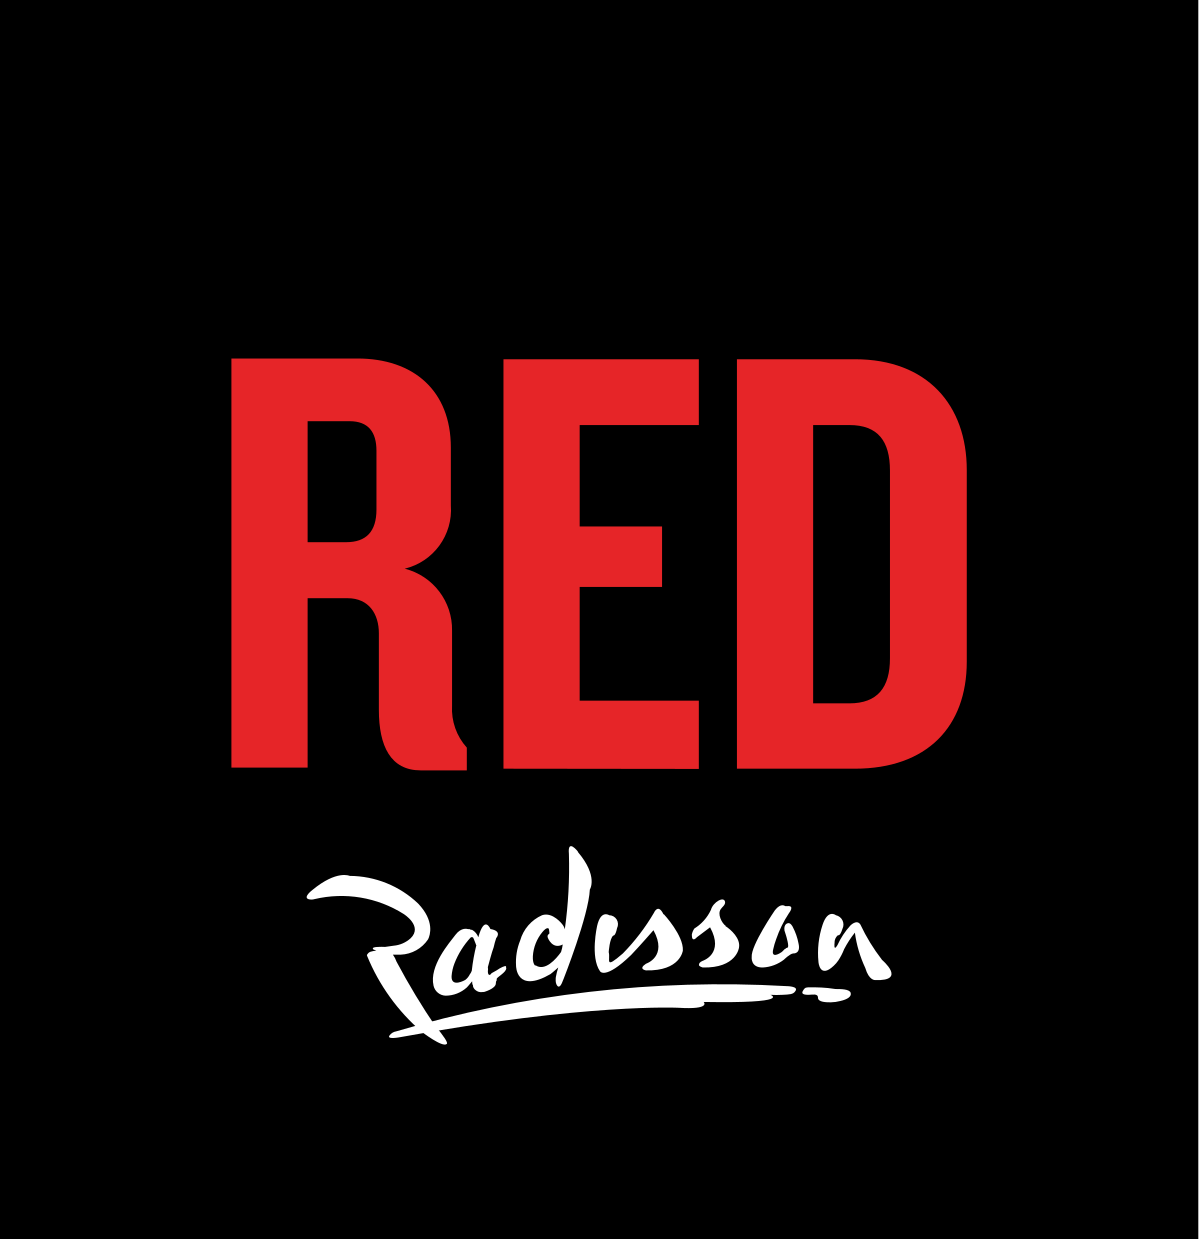 Radisson Red - Wikipedia